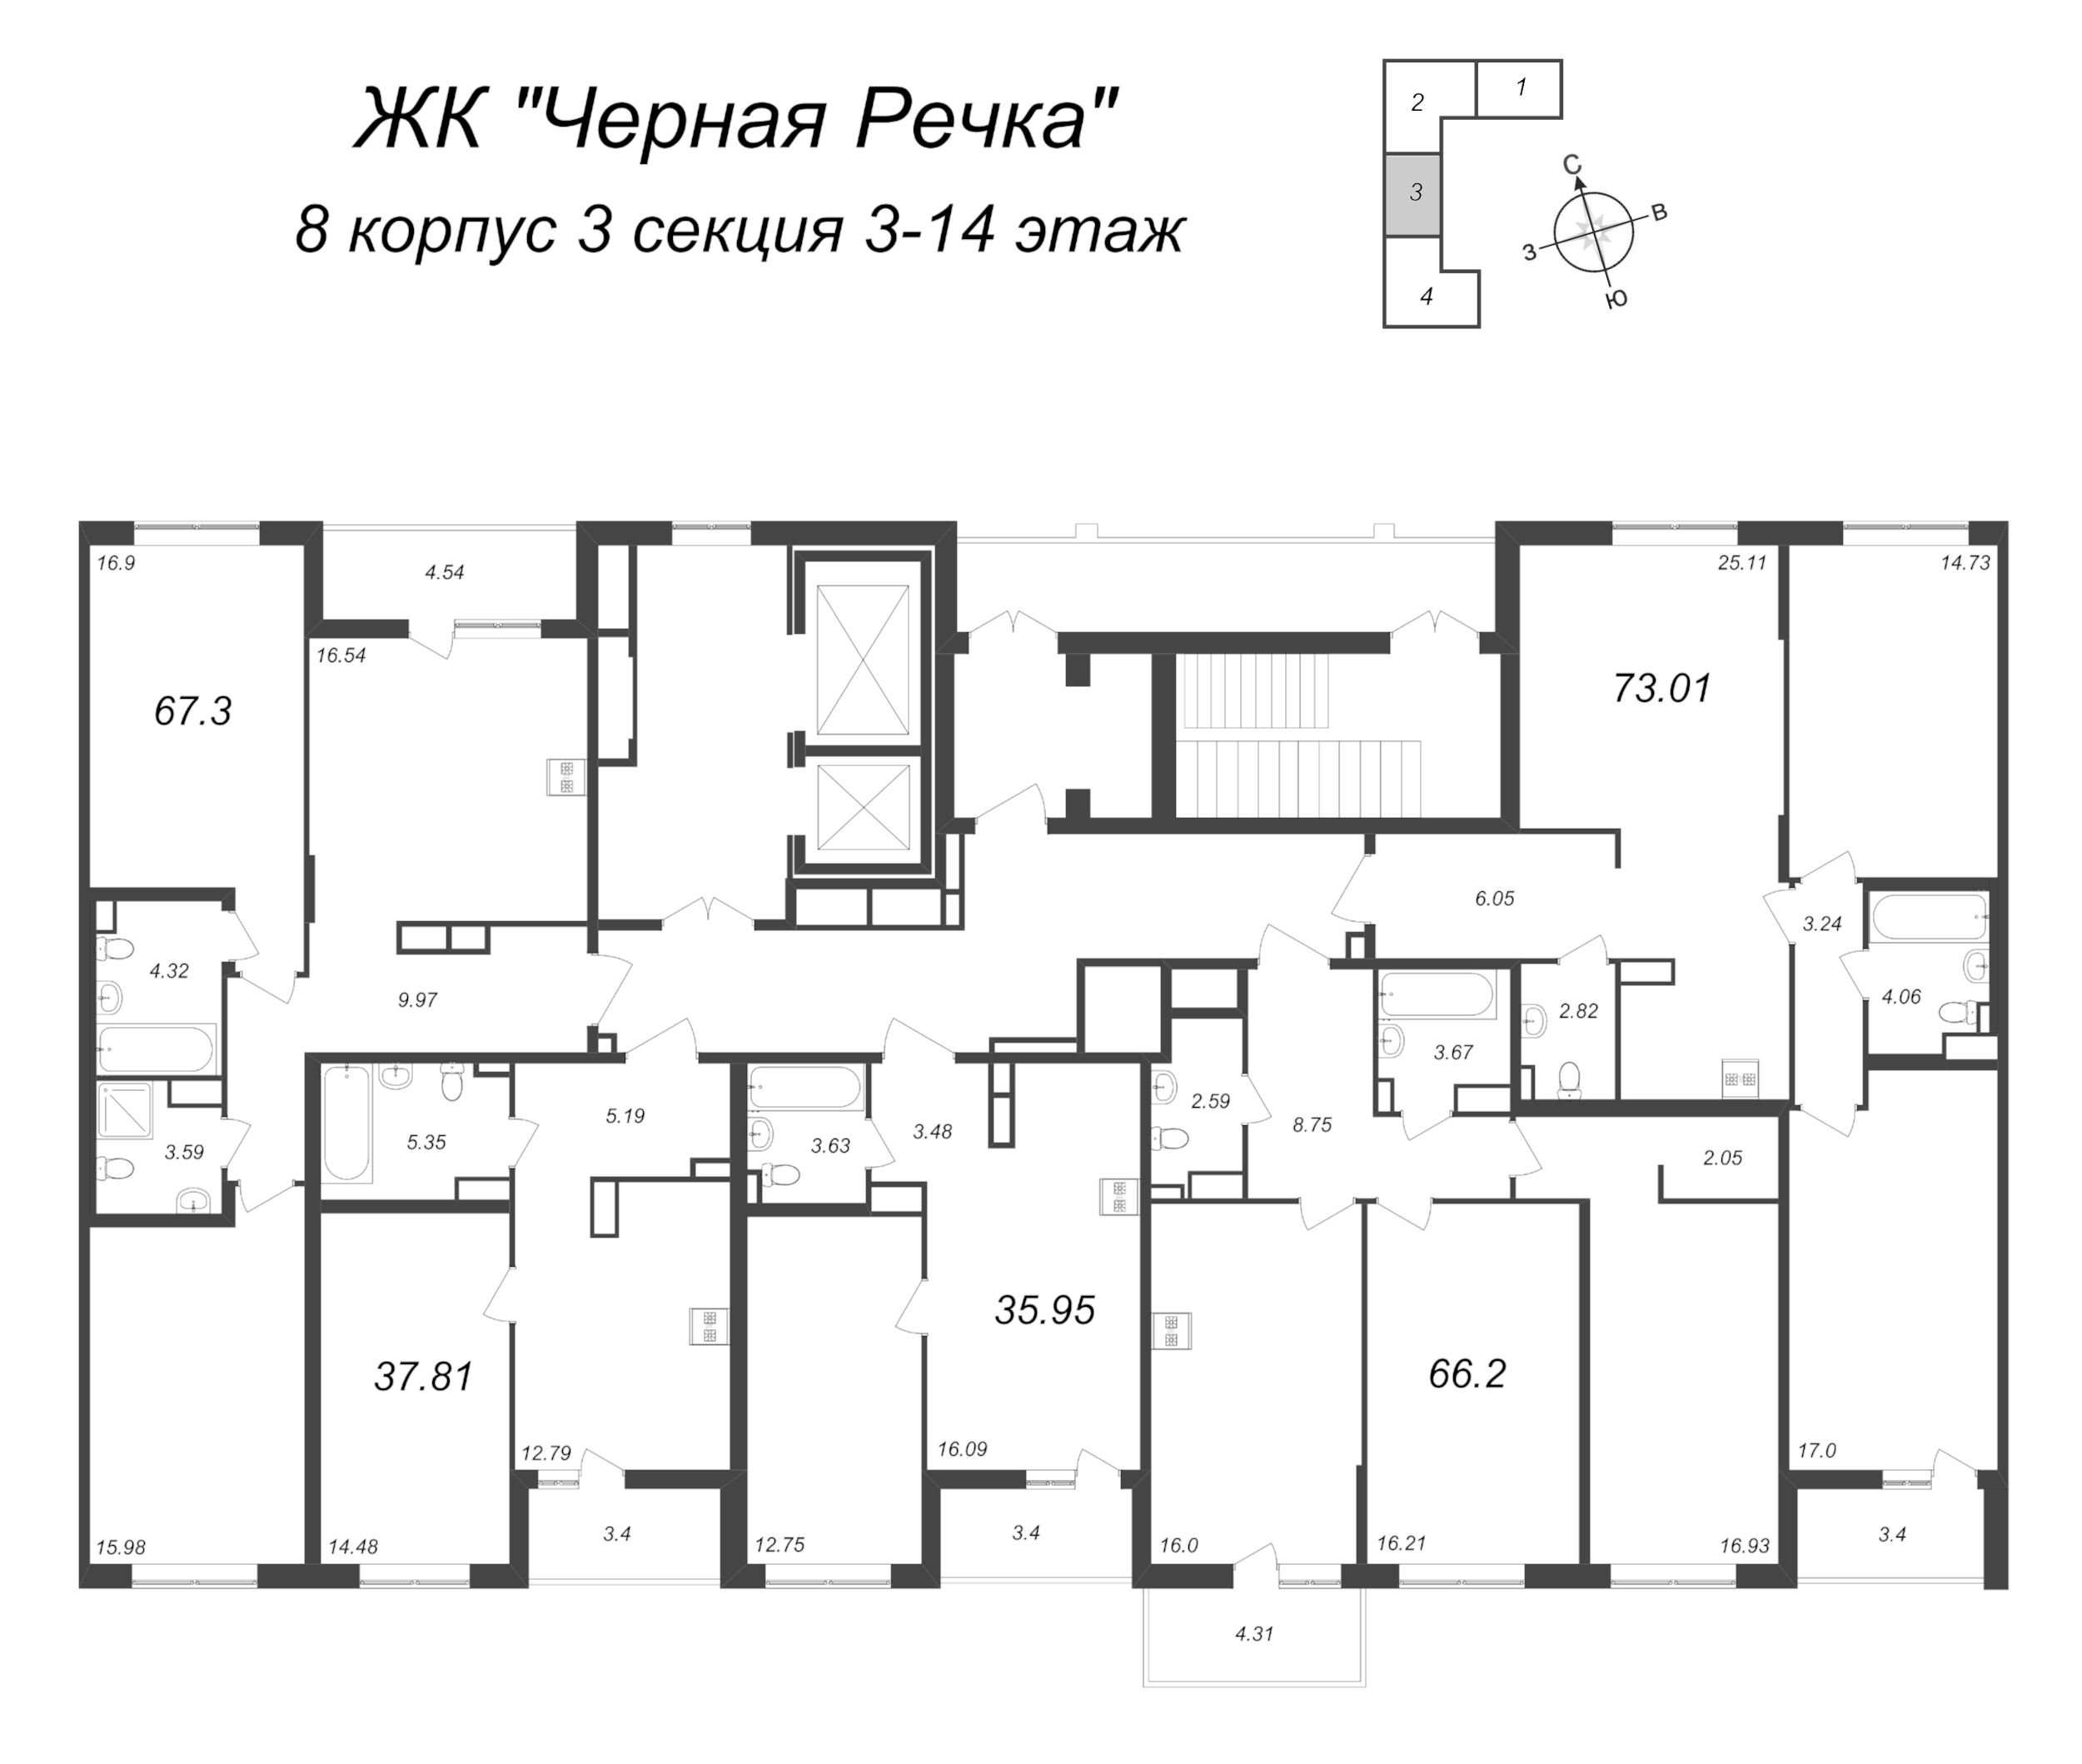 1-комнатная квартира, 37.81 м² в ЖК "Чёрная речка от Ильича" - планировка этажа